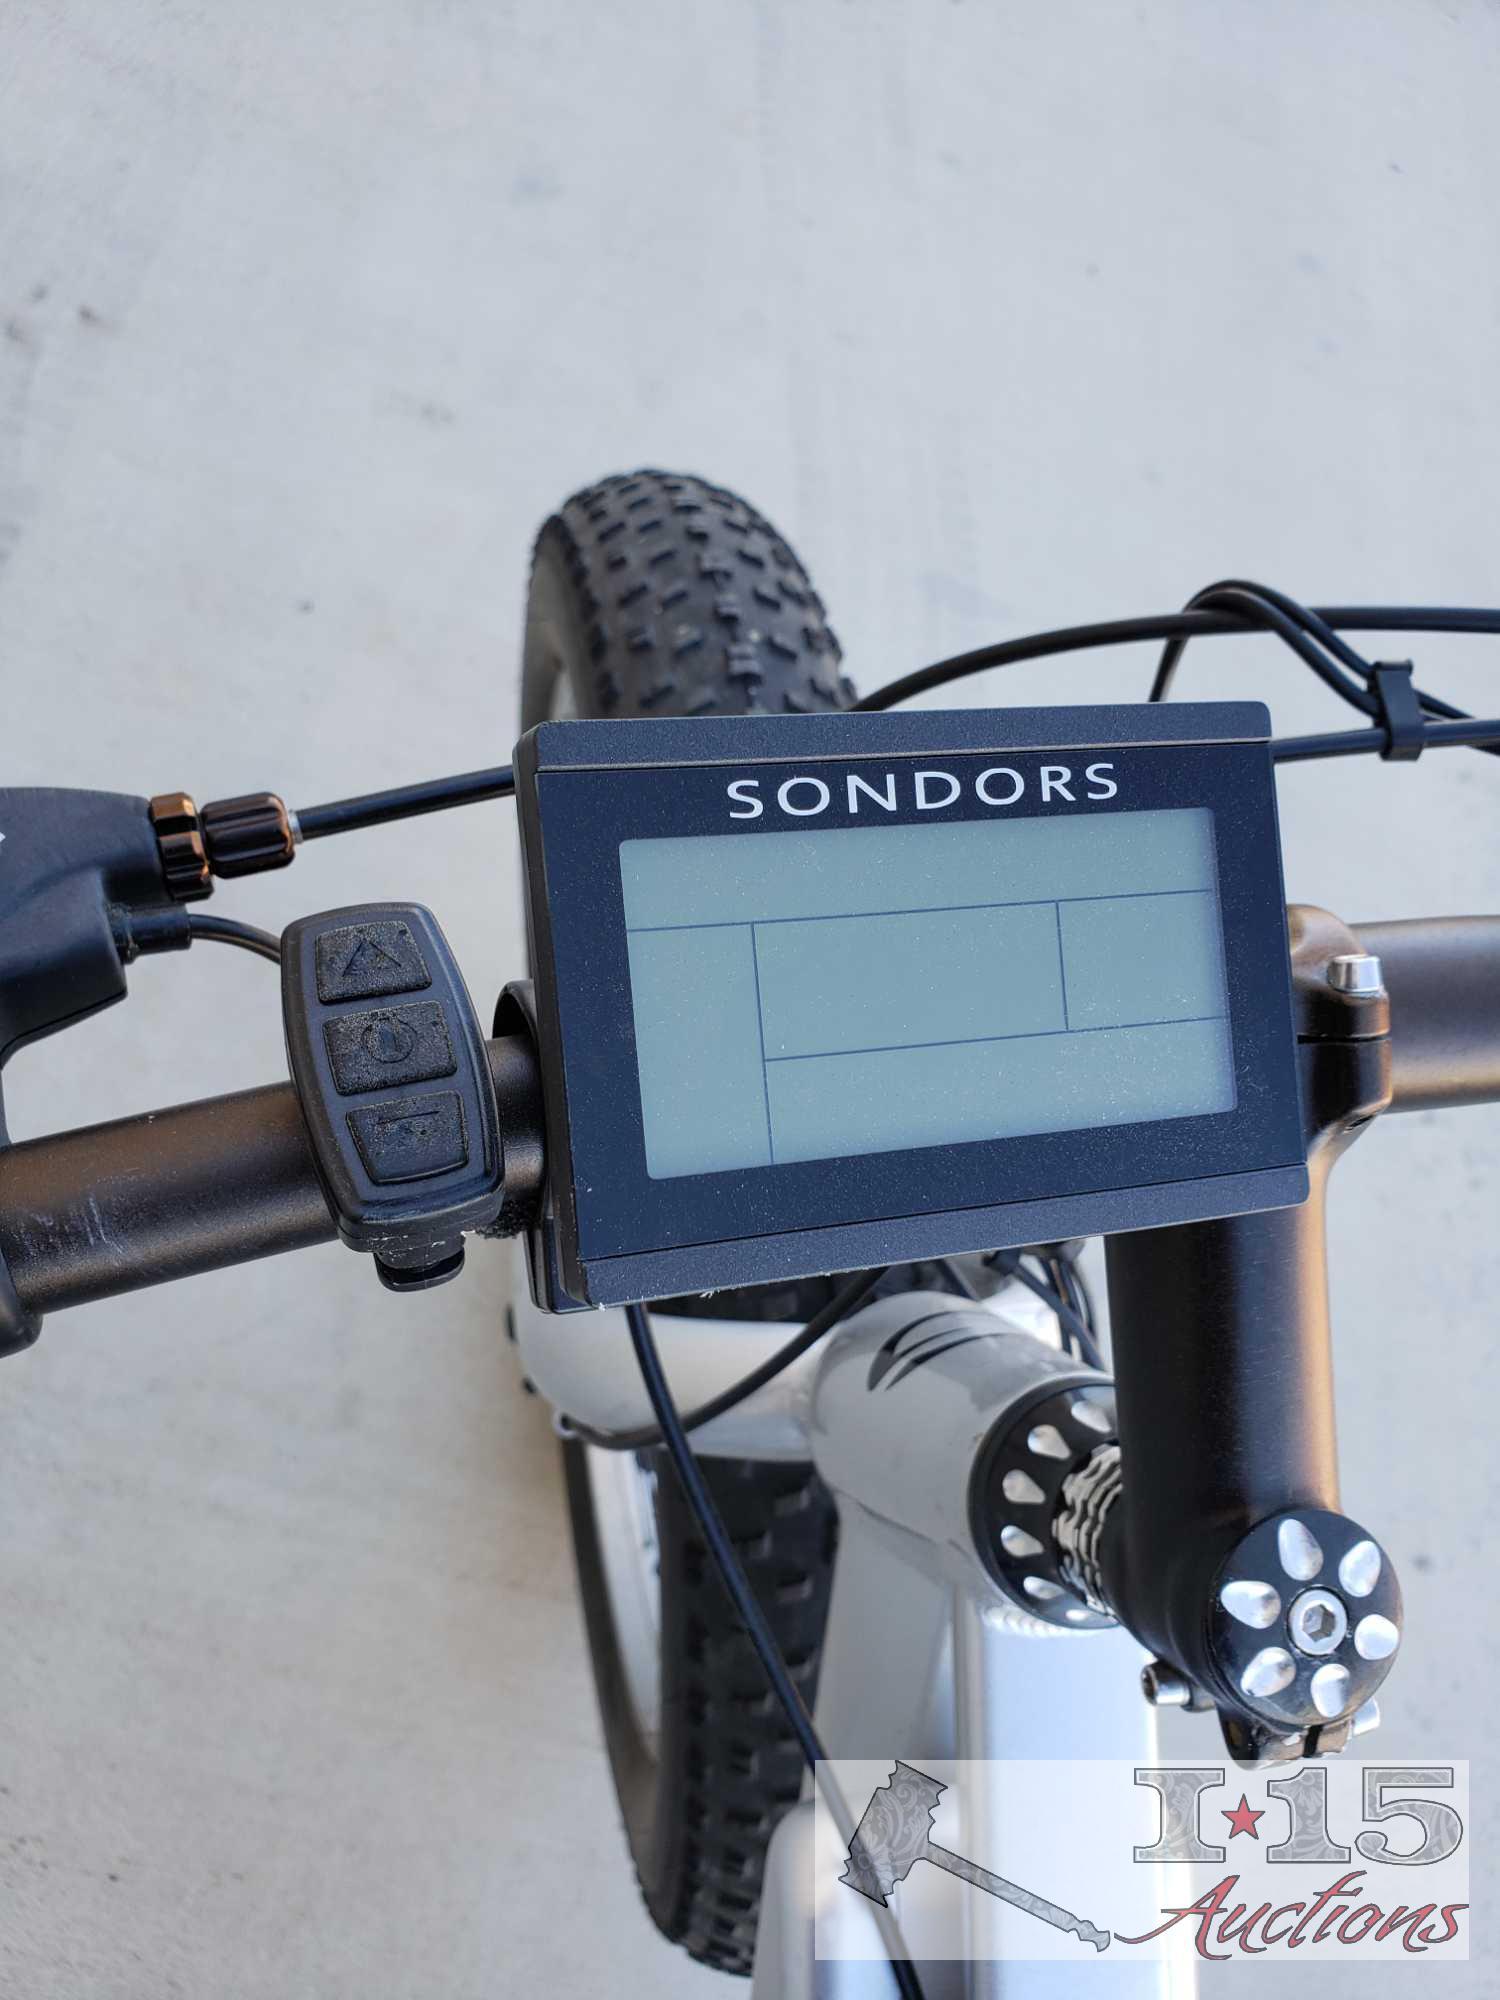 Sondors Battery Operated Mountain Bike